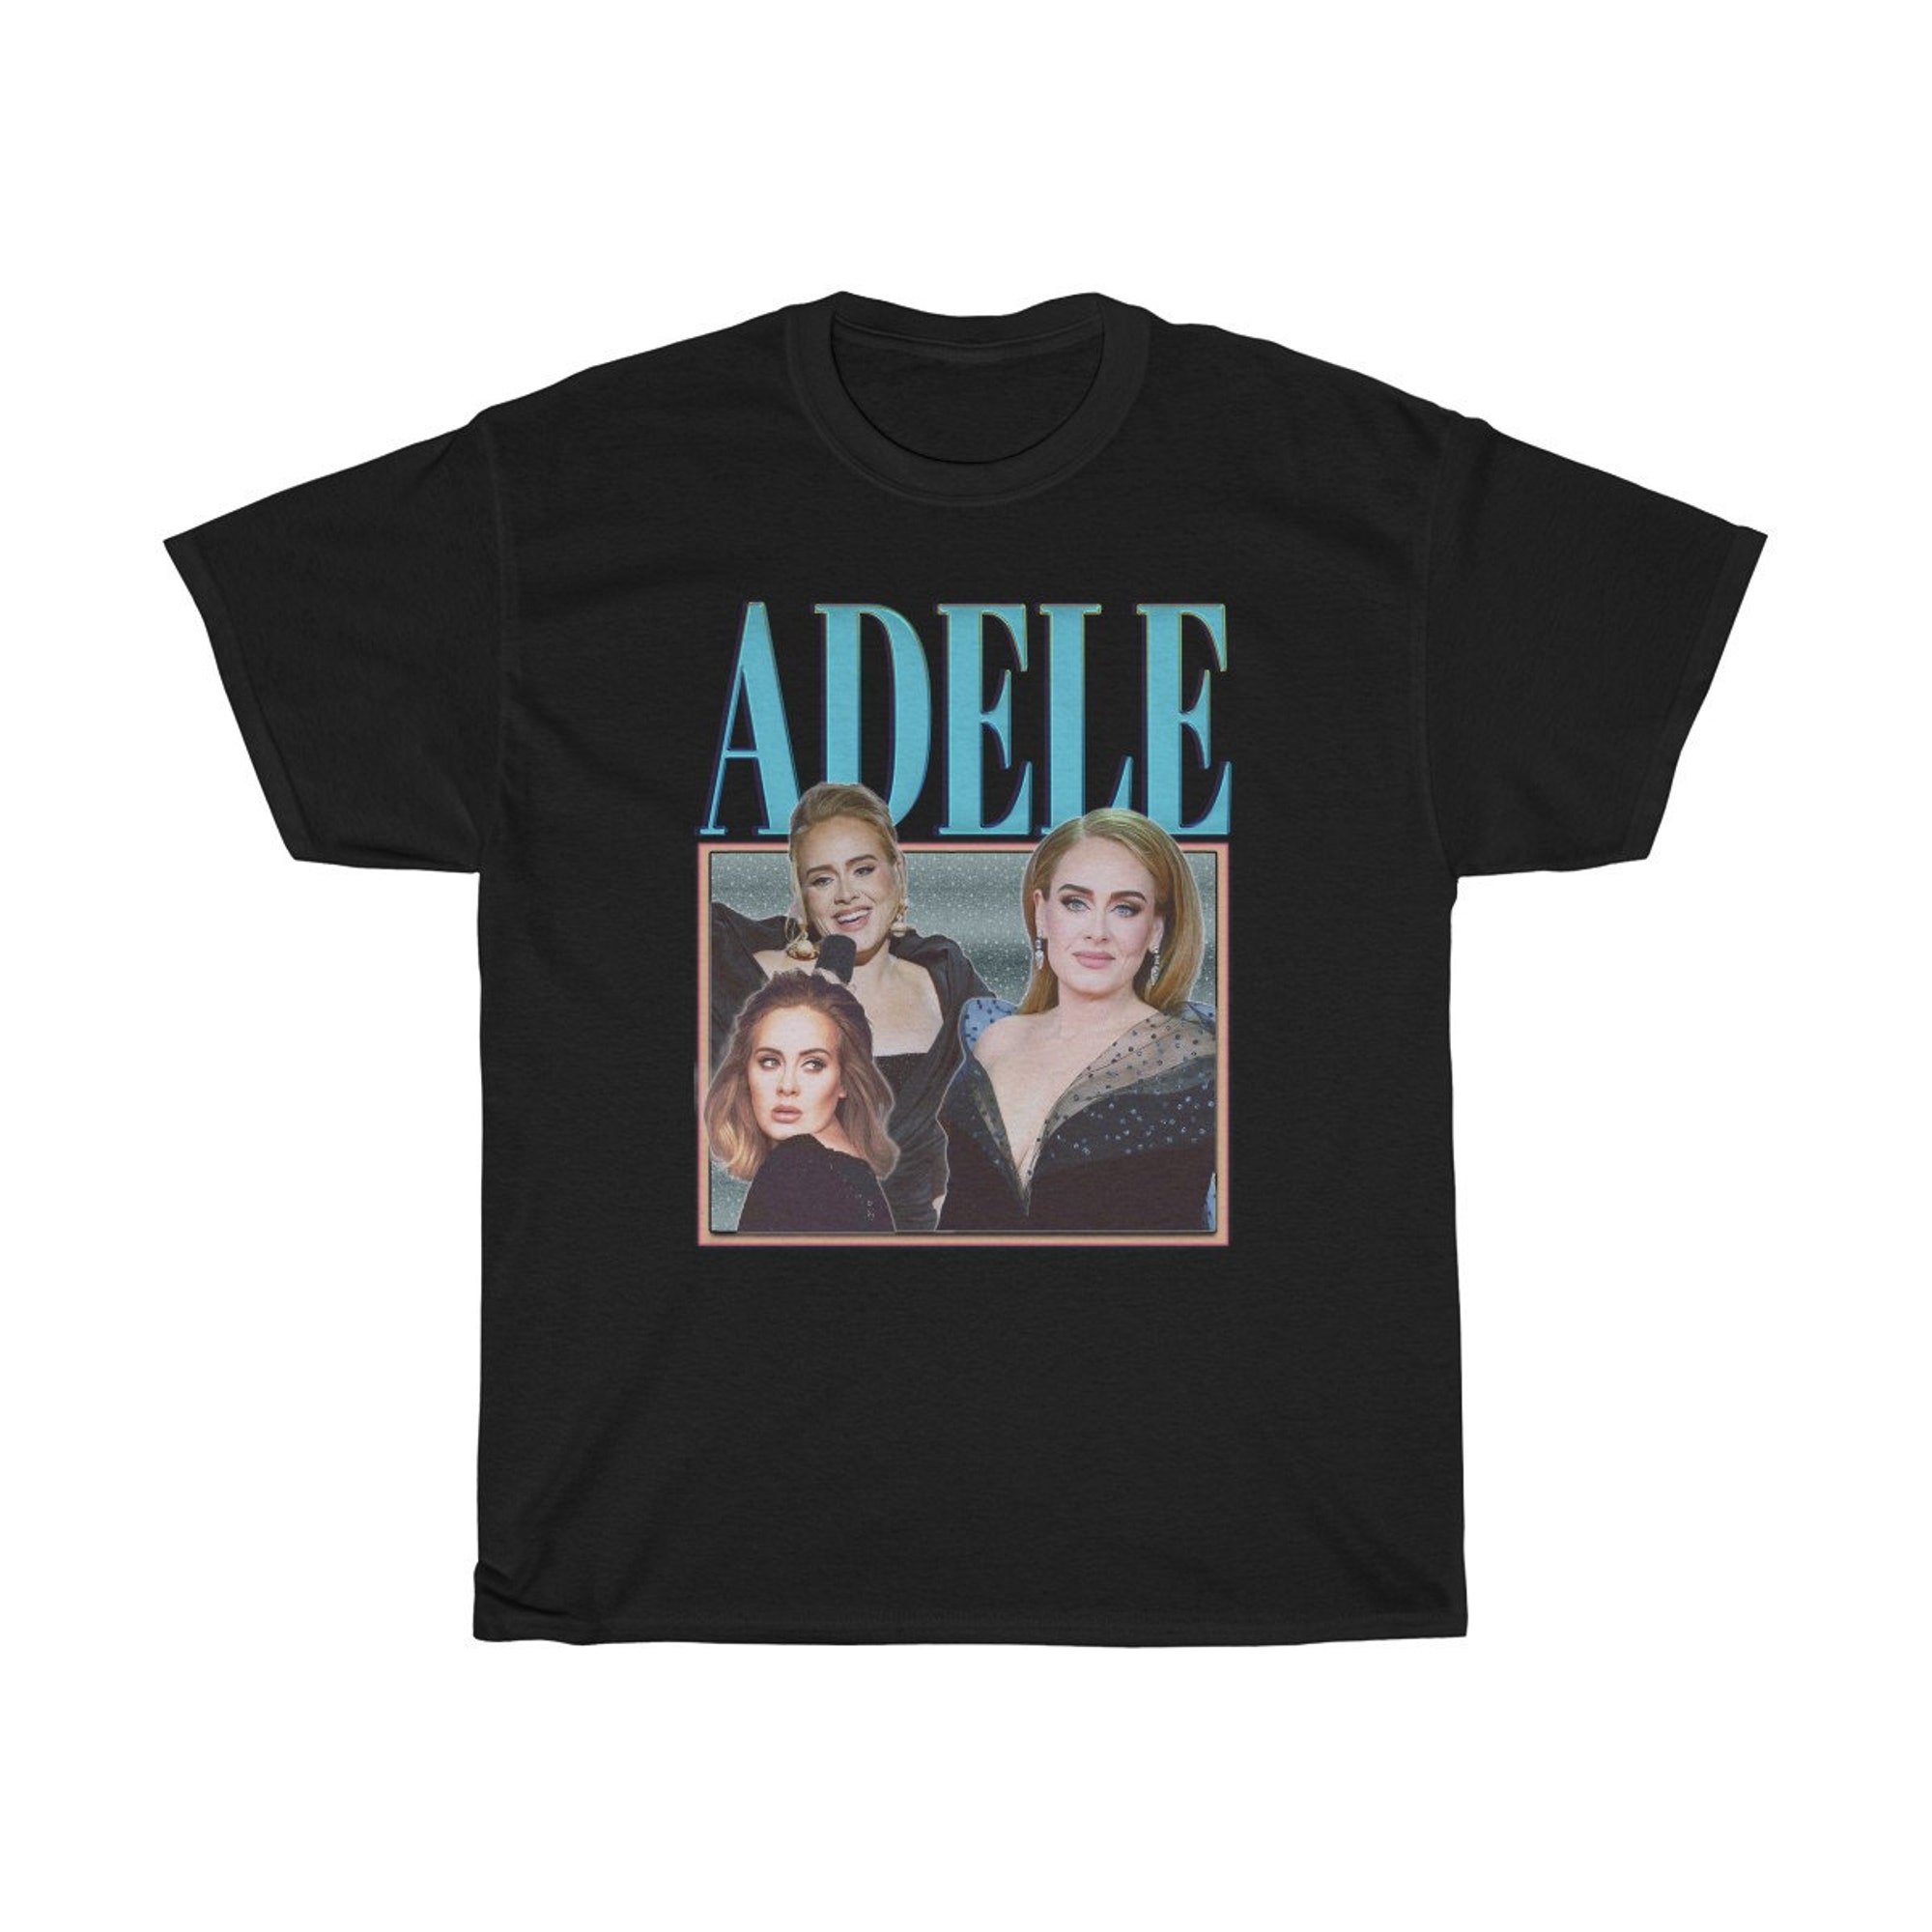 Discover Adele Retro Shirt, Adele Shirt, Adele Easy On Me Vintage Shirt, Gift for fan, Tour Merch Shirt